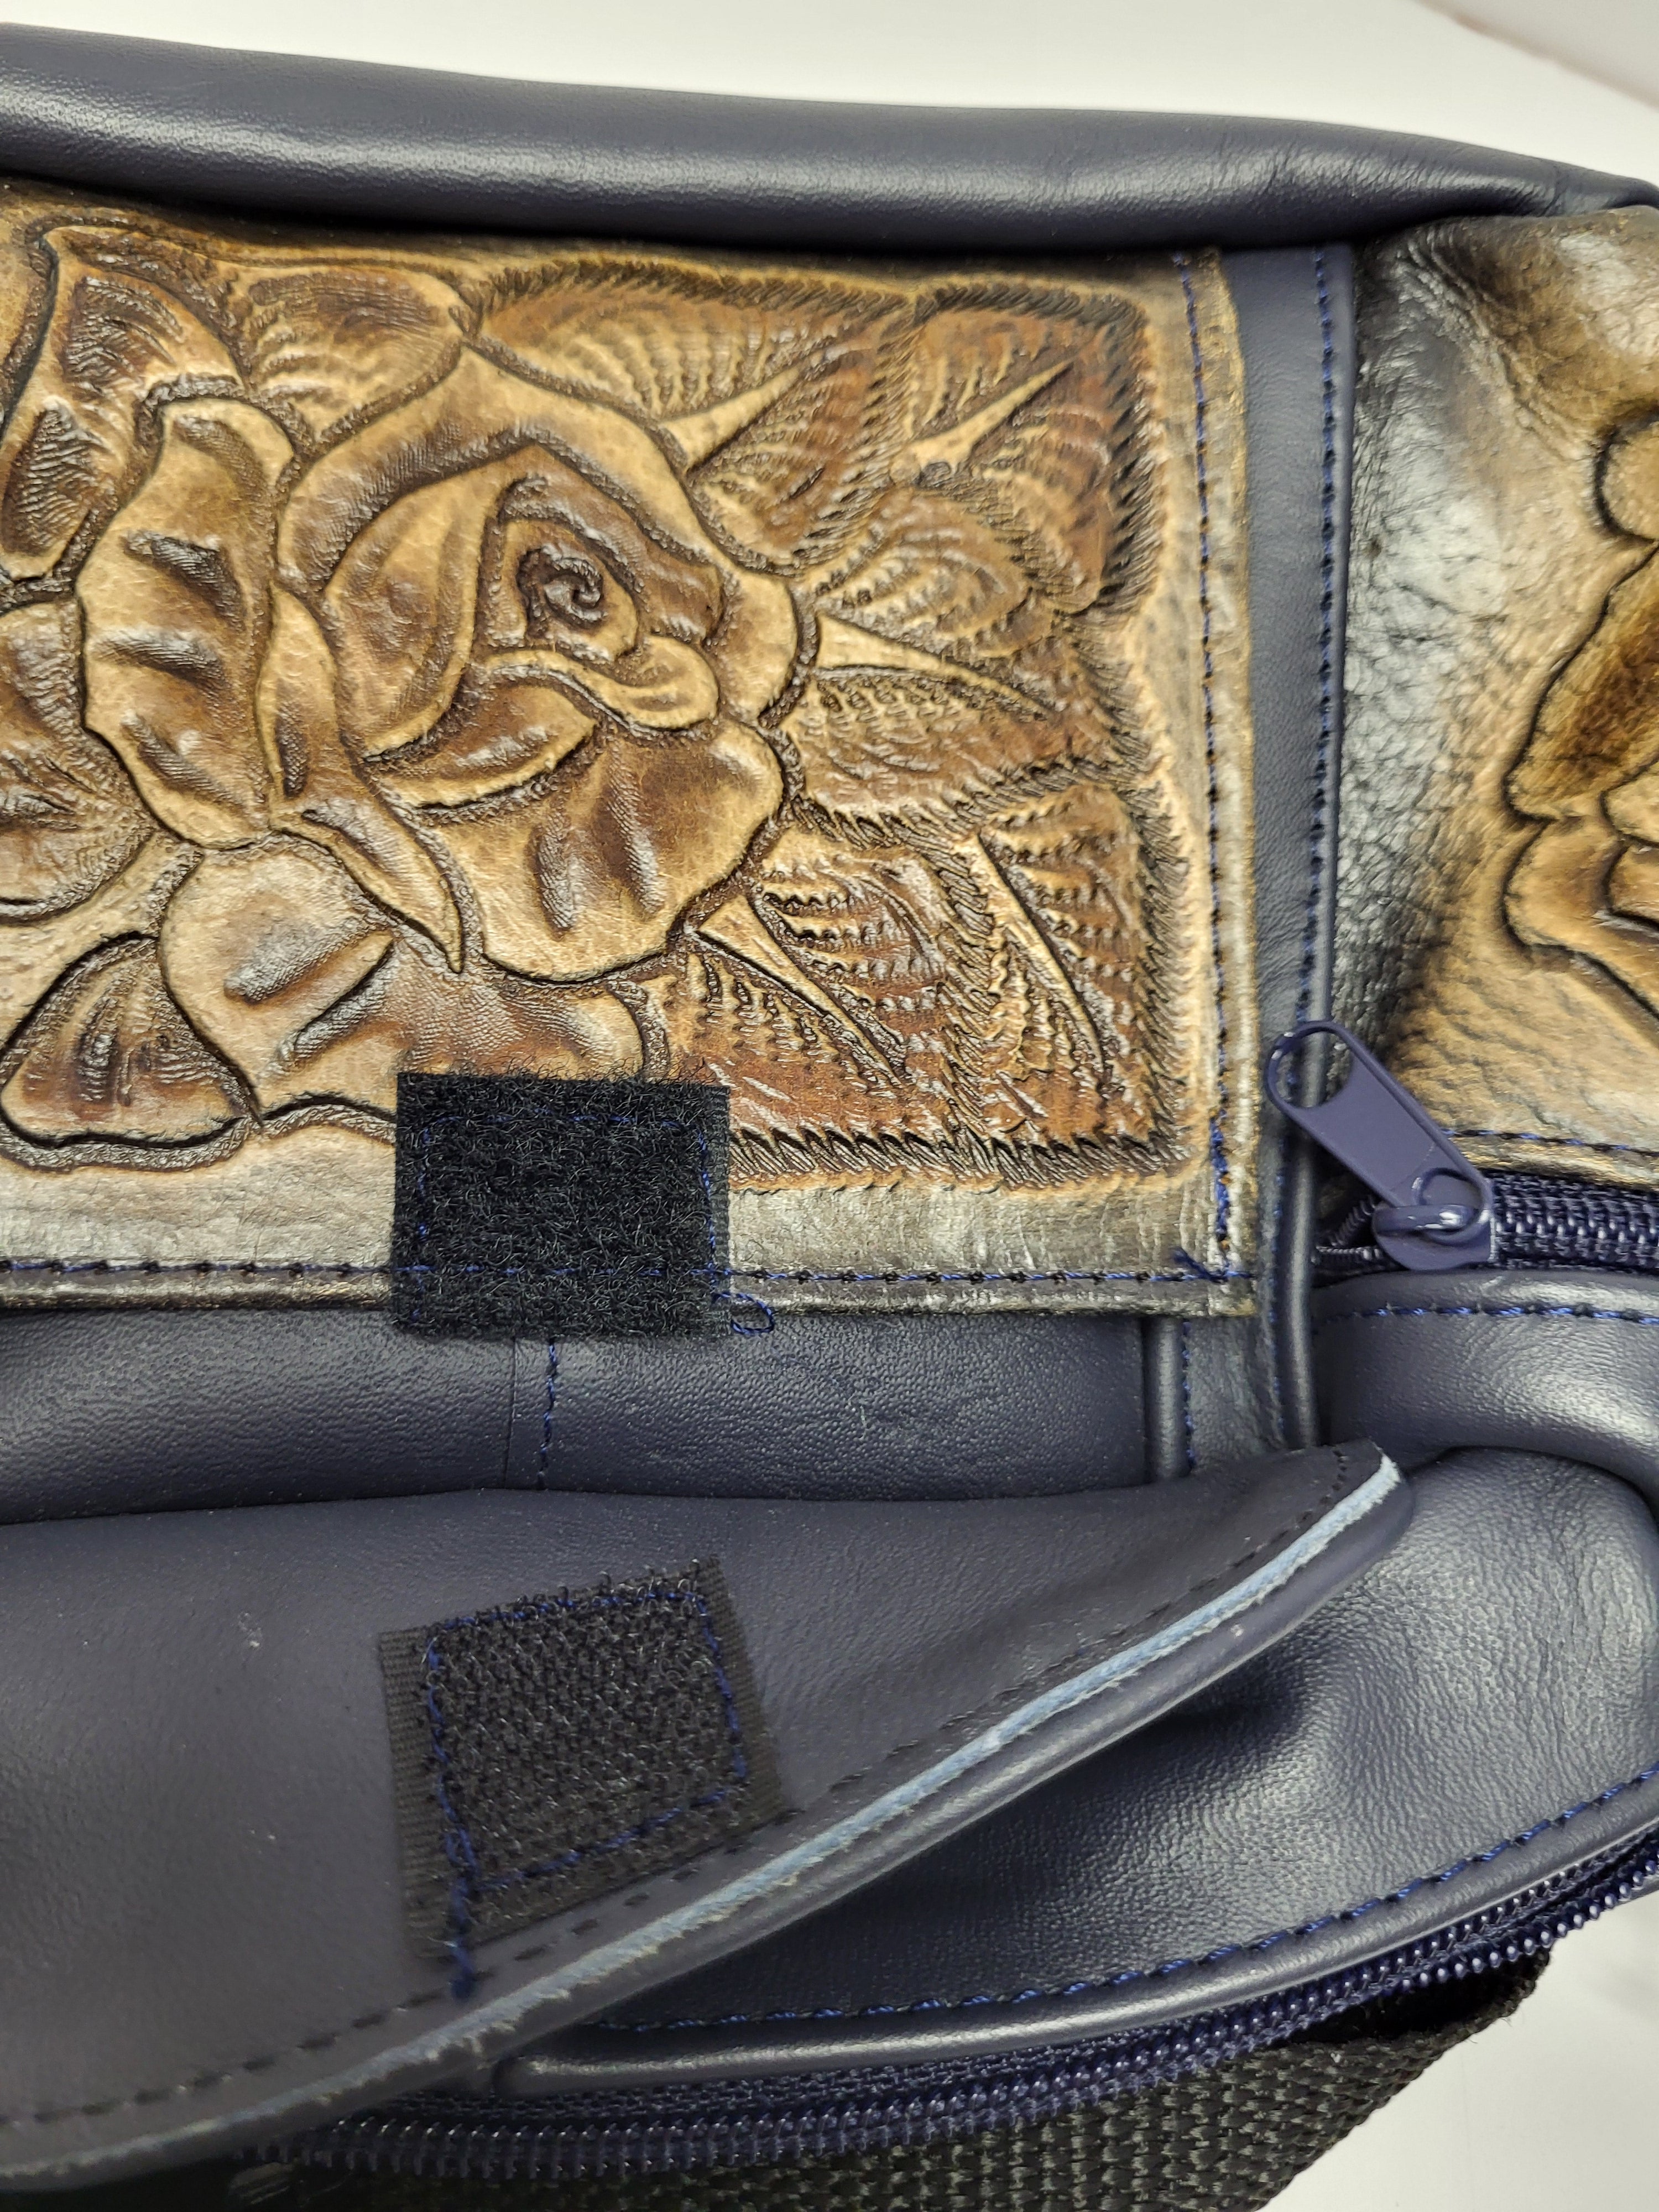 Blue Leather Tooled Fanny Pack/Sling Bag